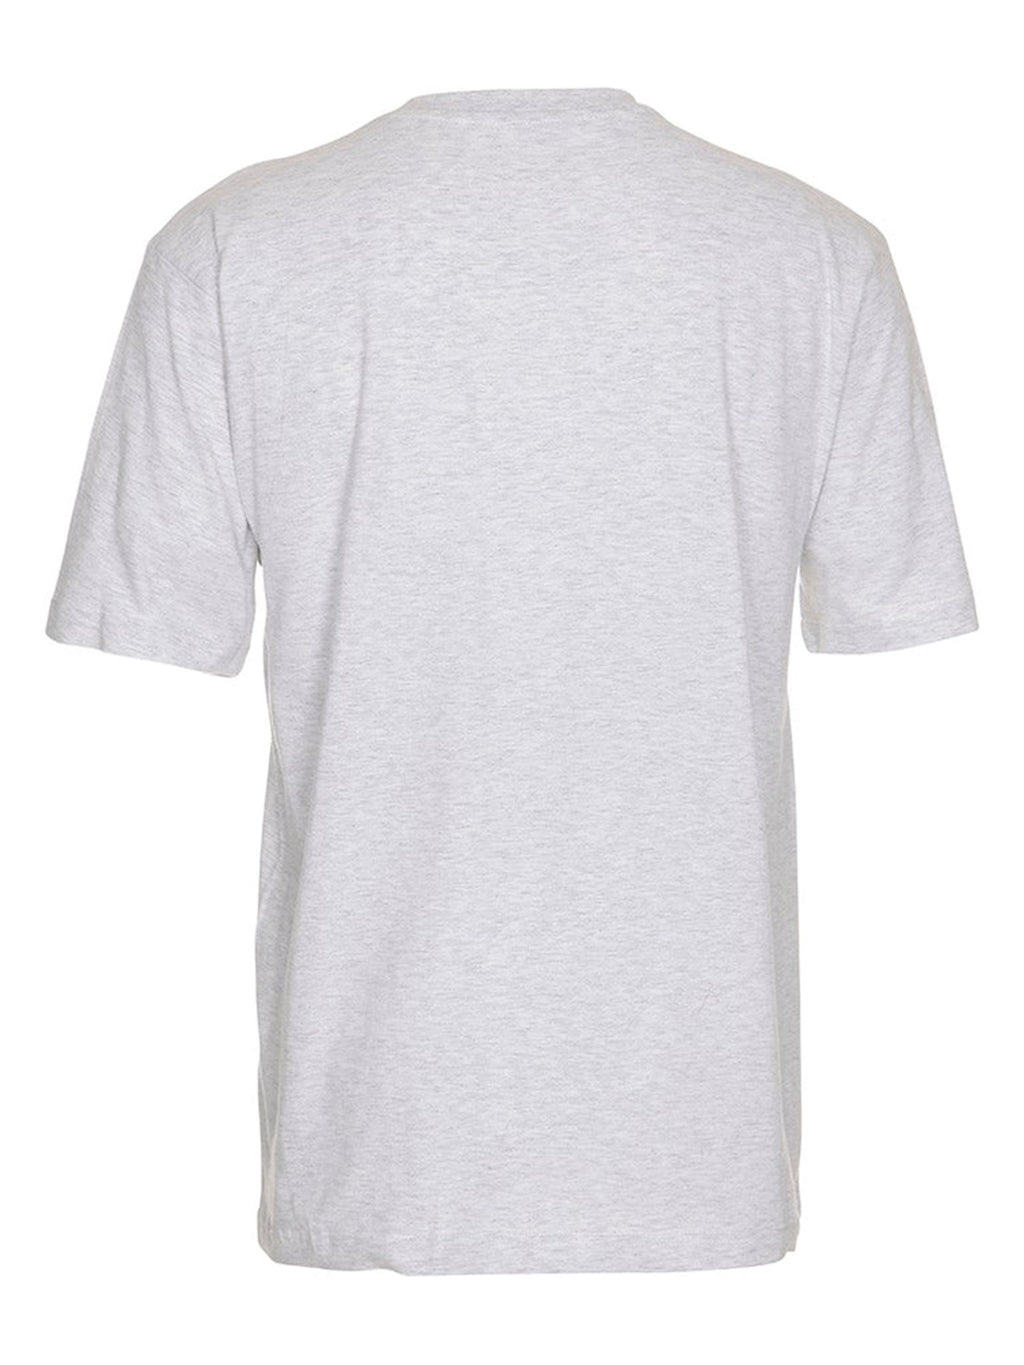 Oversized T-shirt - Askegrå (dame)